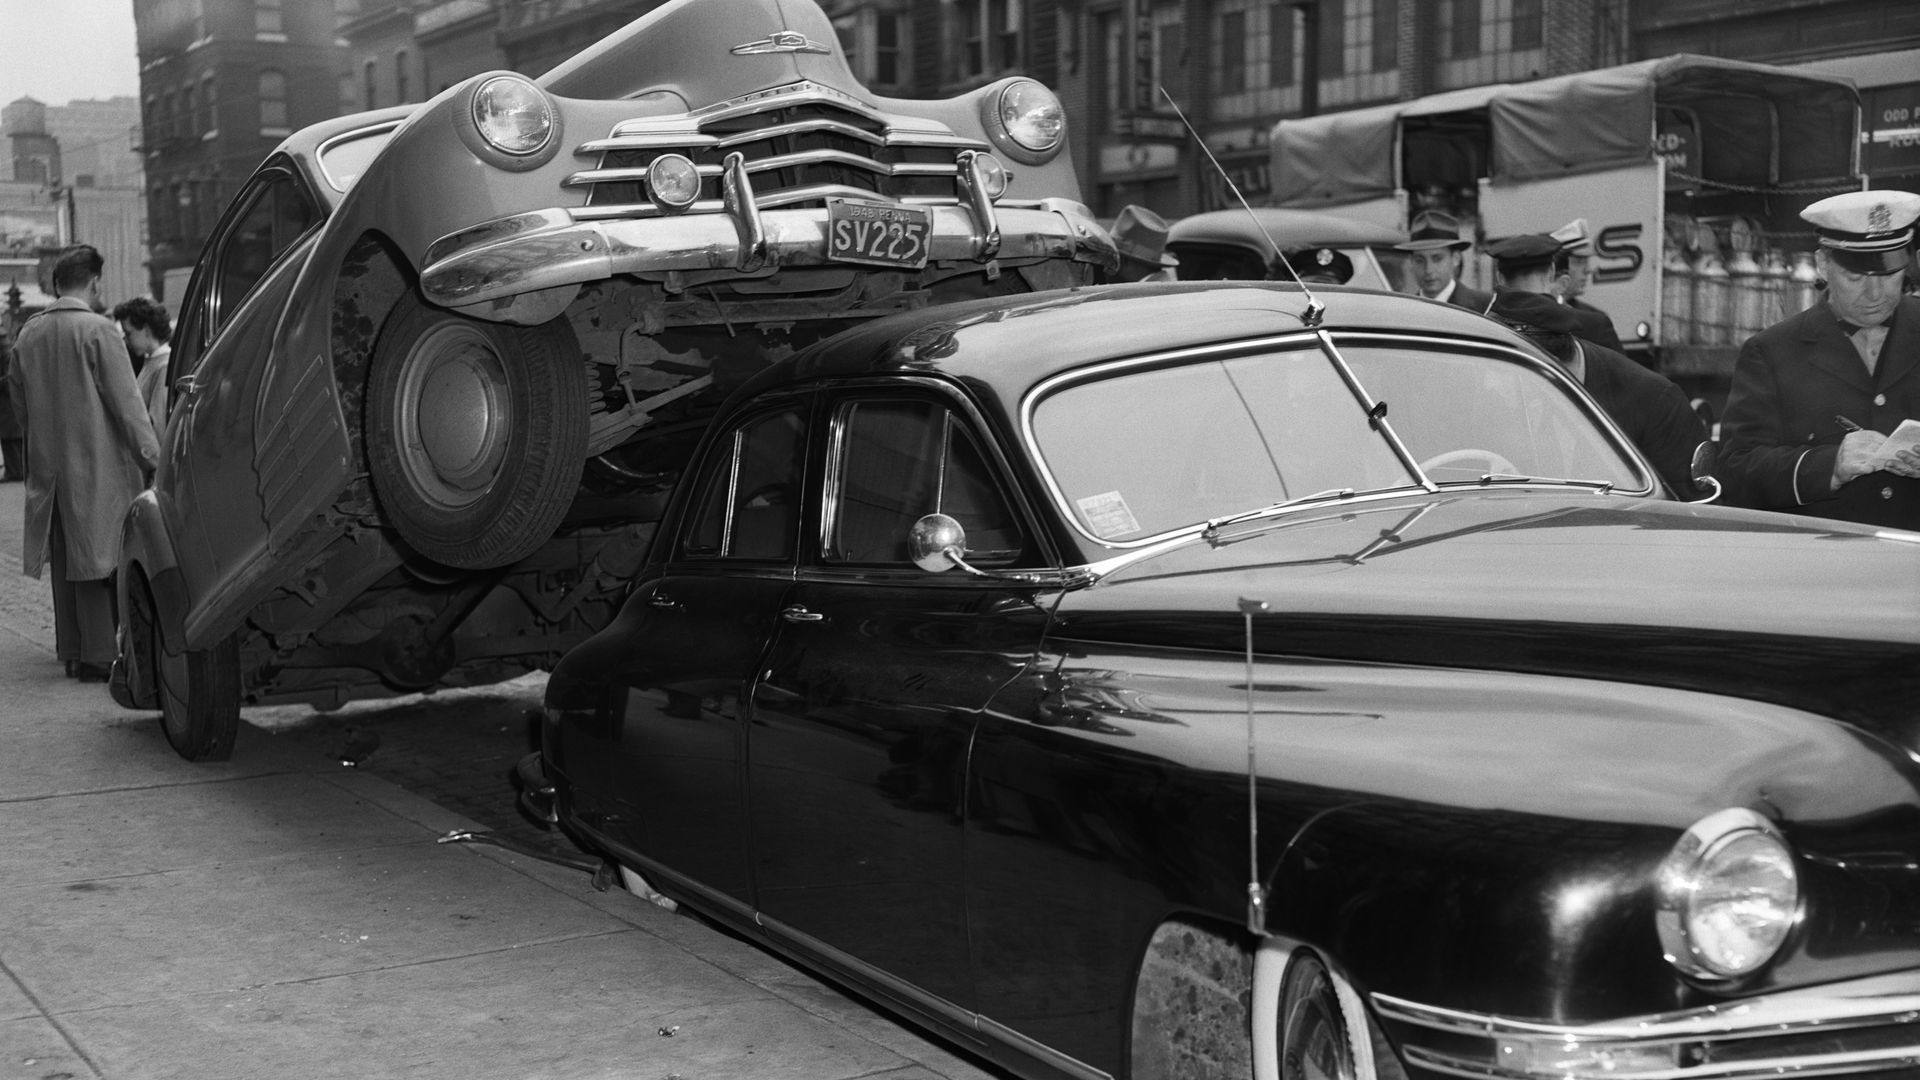 Image of a 1940s car crash